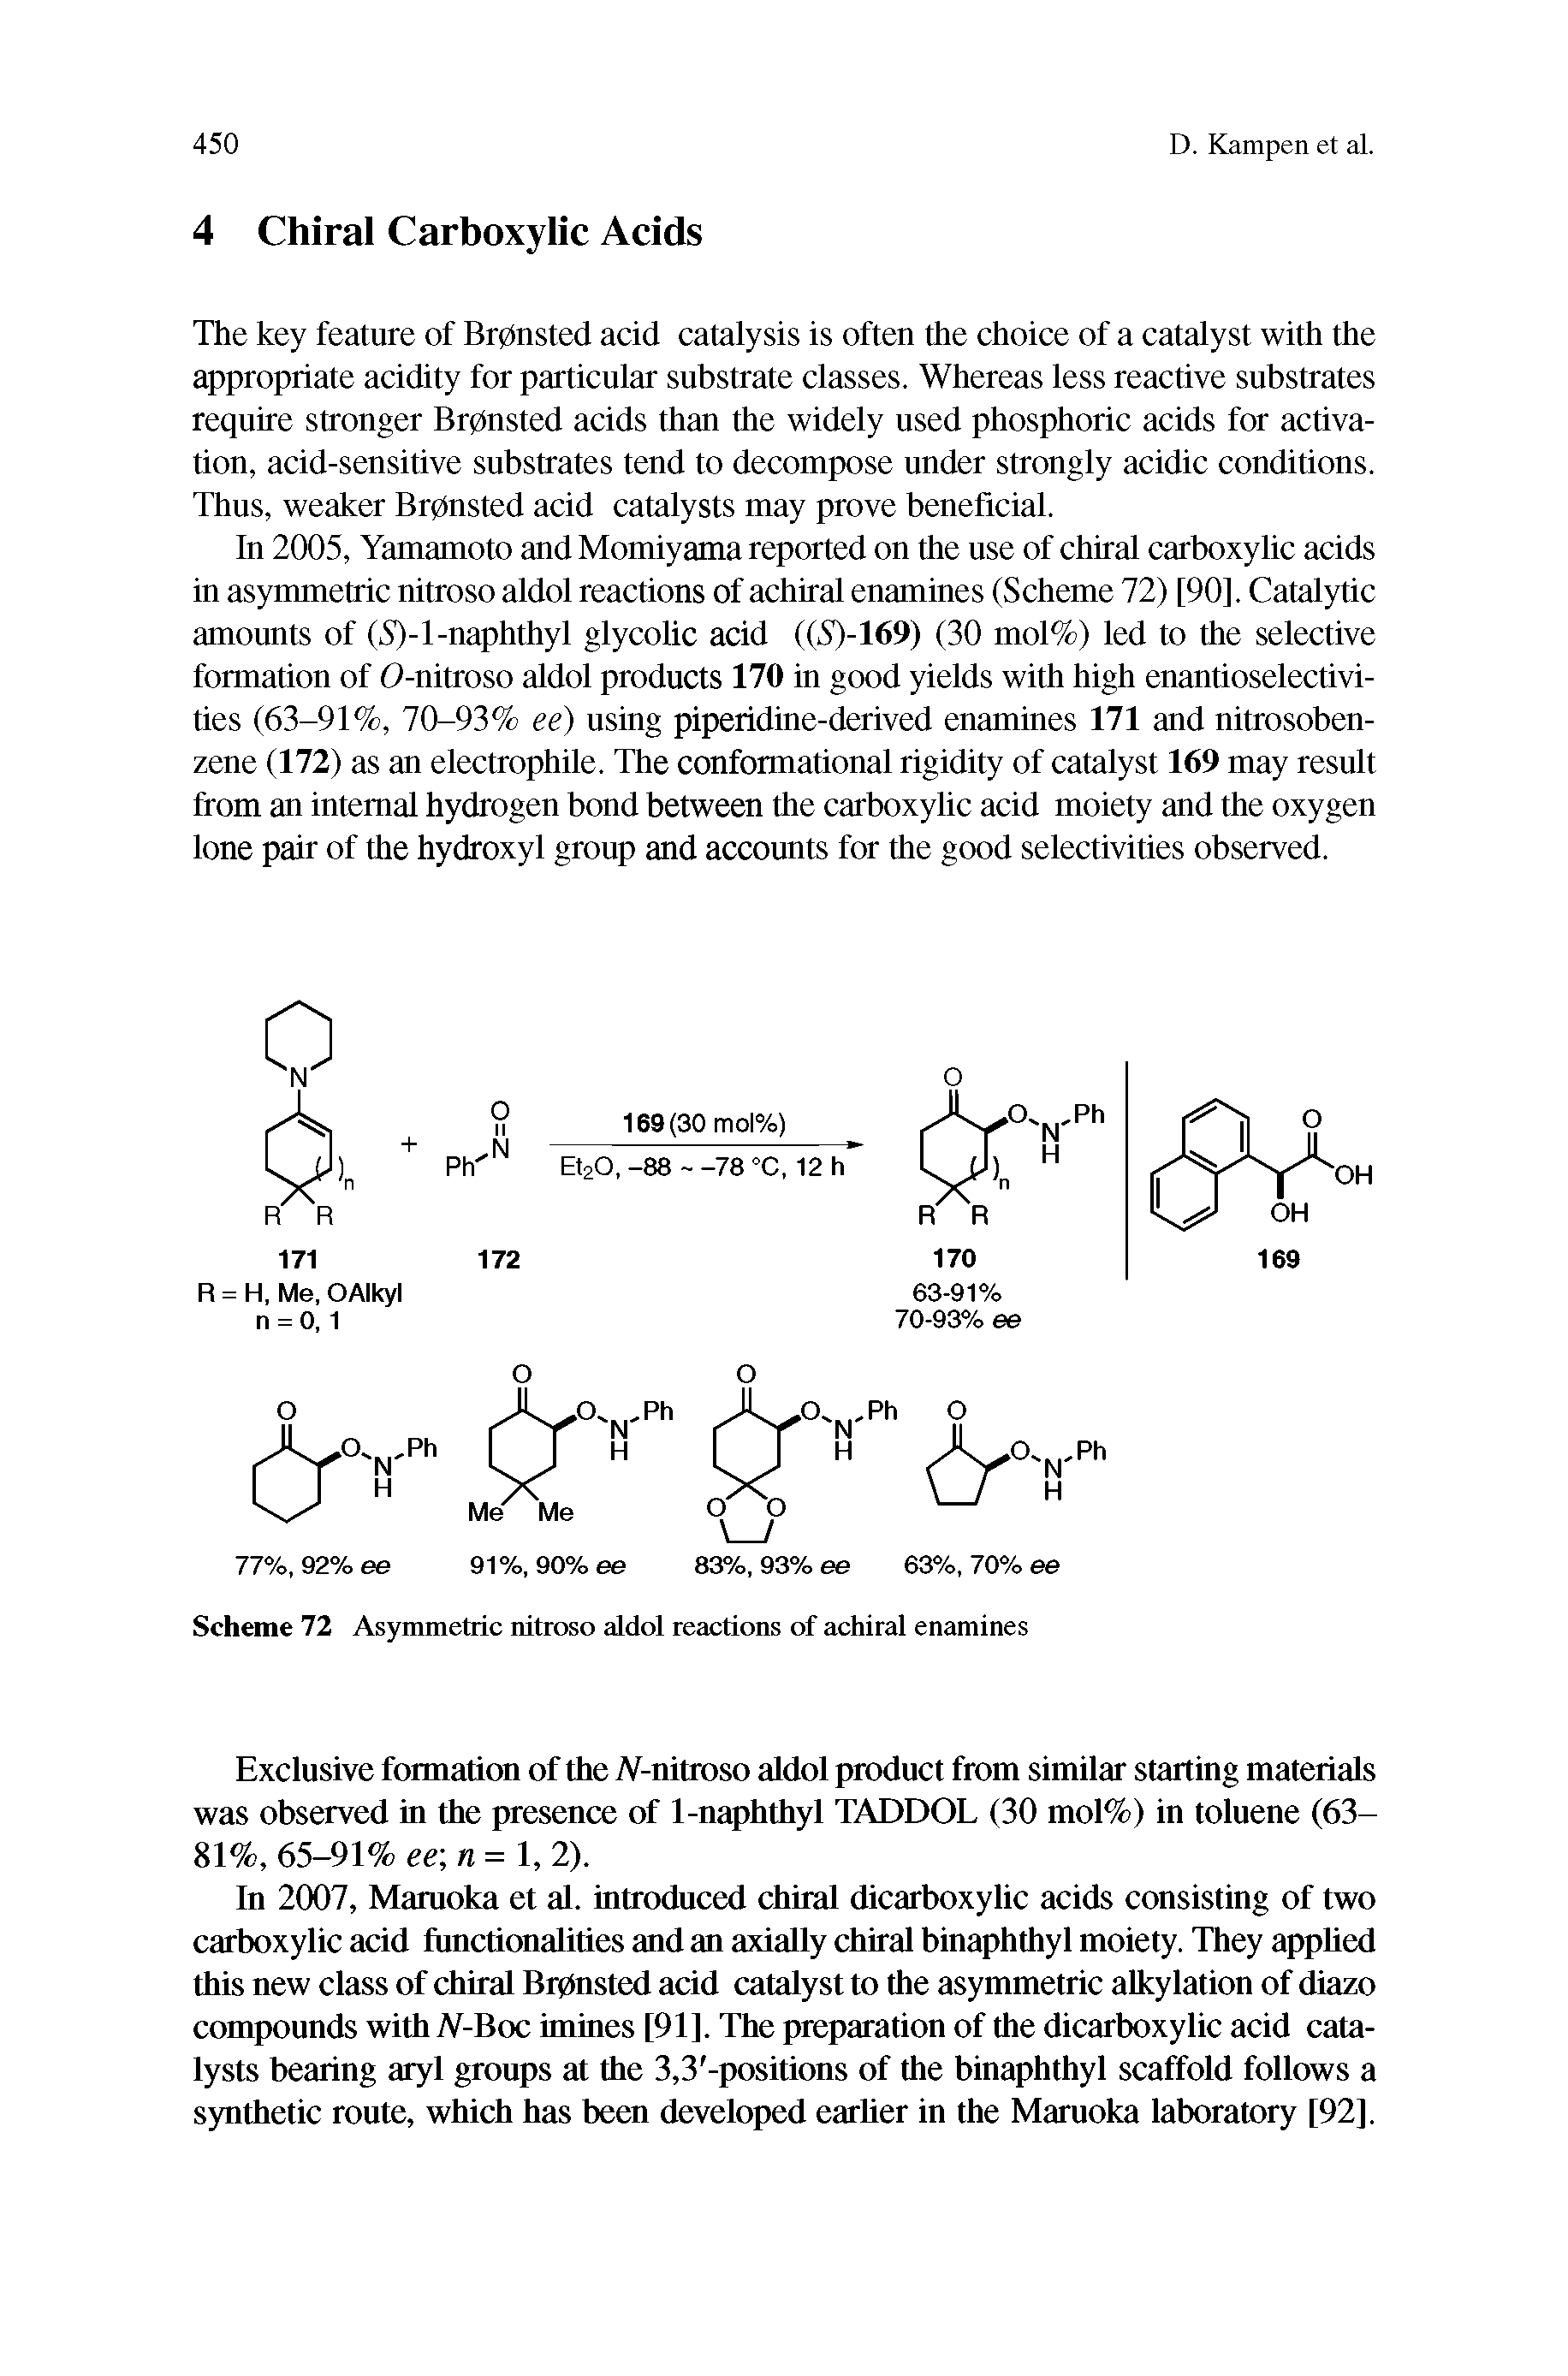 Scheme 72 Asymmetric nitroso aldol reactions of achiral enamines...